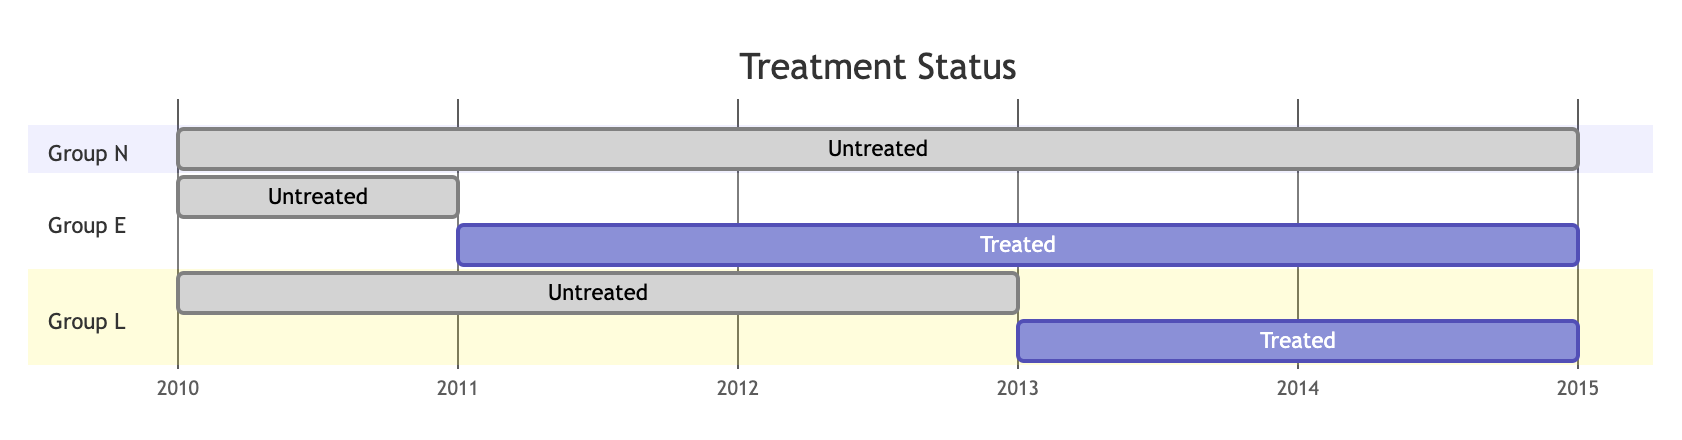 treatment-status